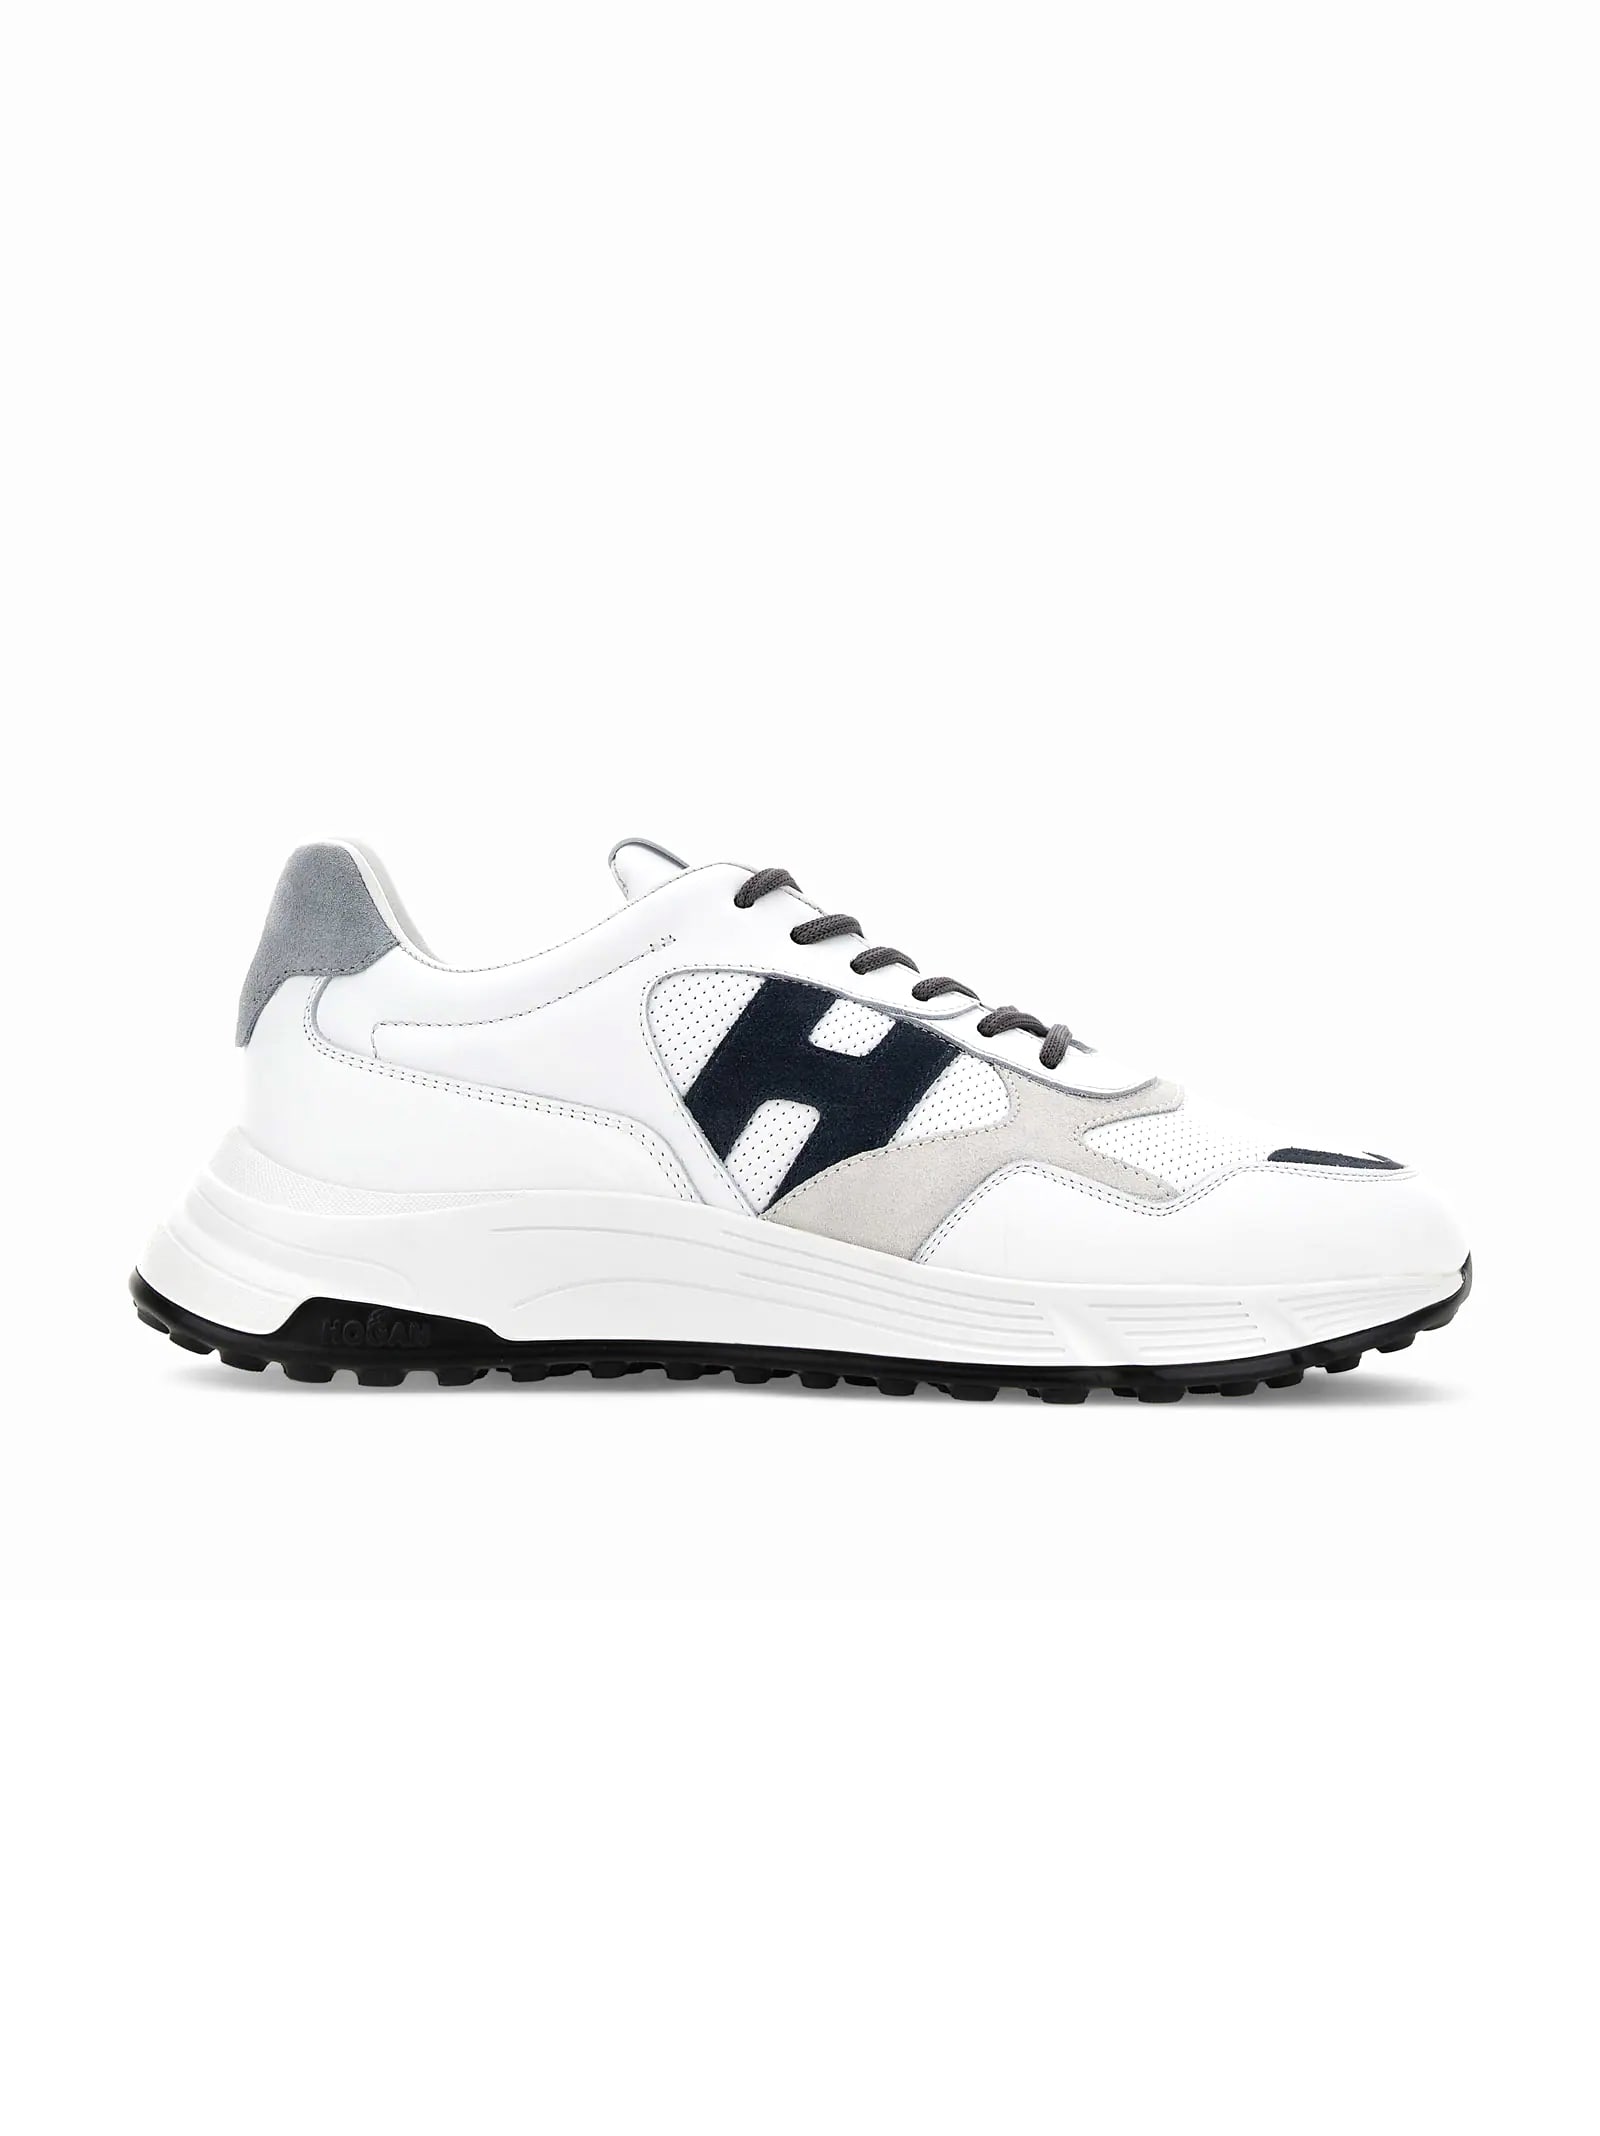 Hogan Sneakers Leather Hyperlight